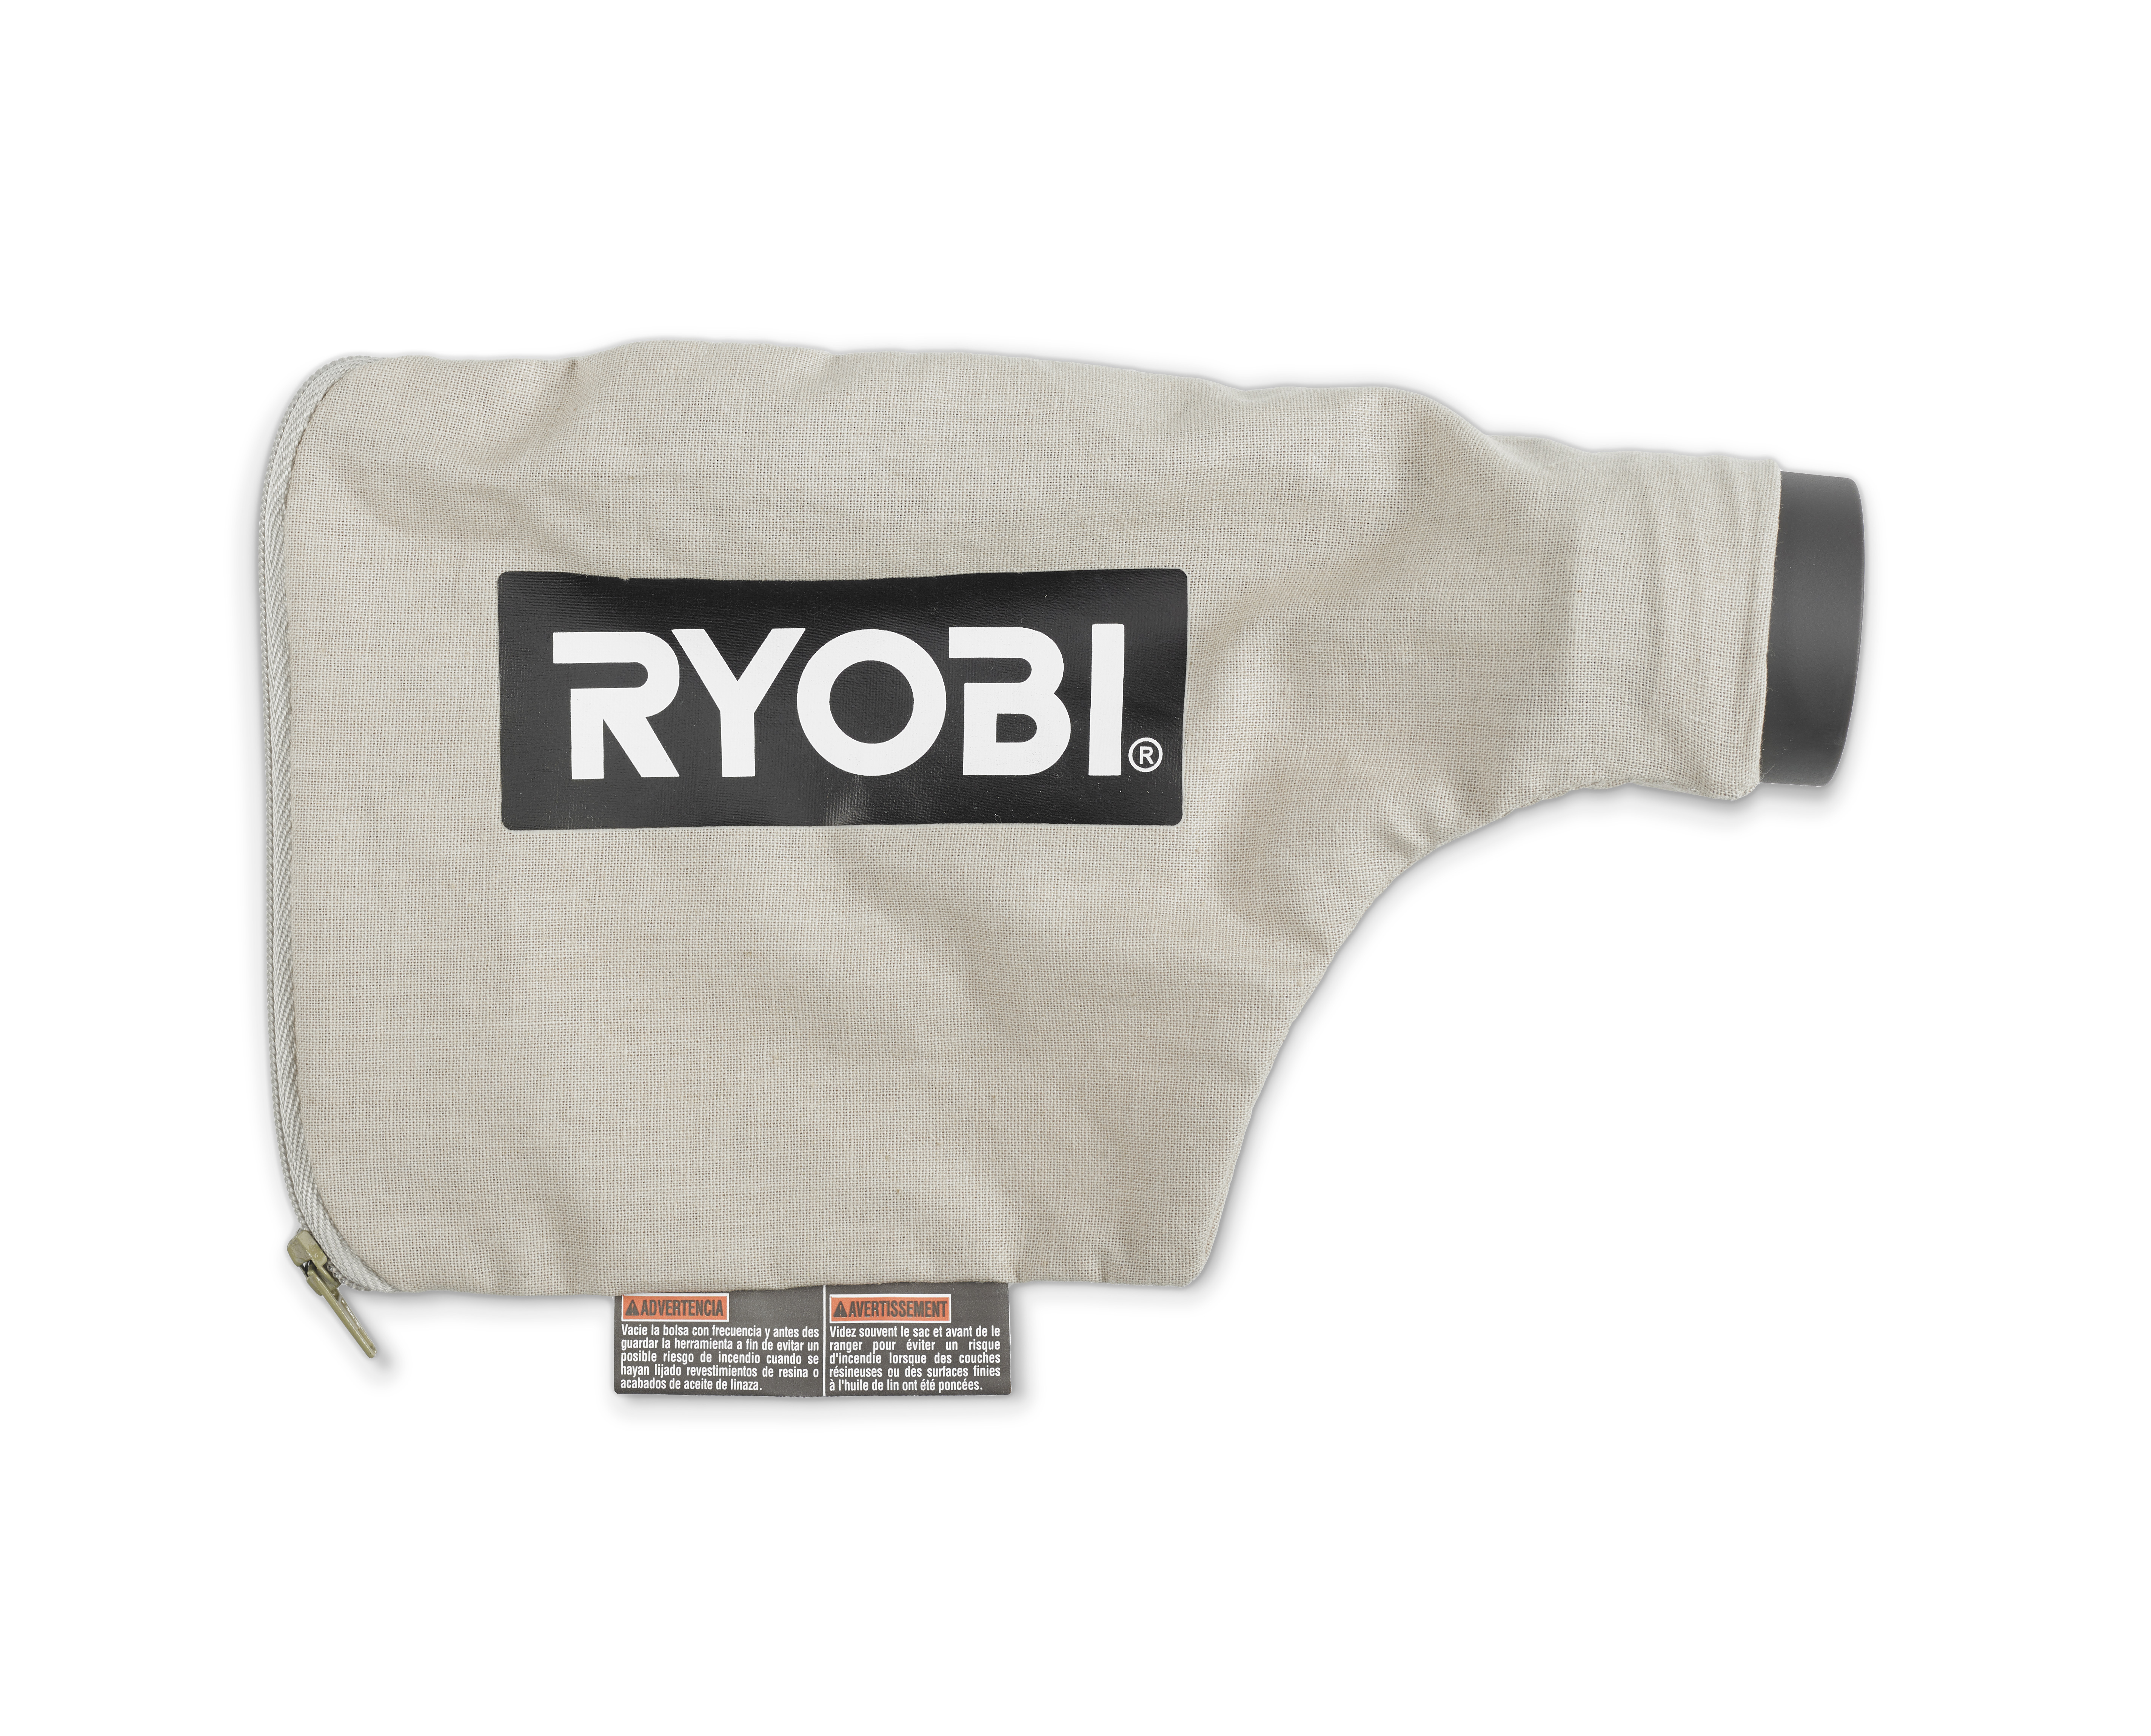 18V ONE+ Cordless Brushless Belt Sander | RYOBI Tools